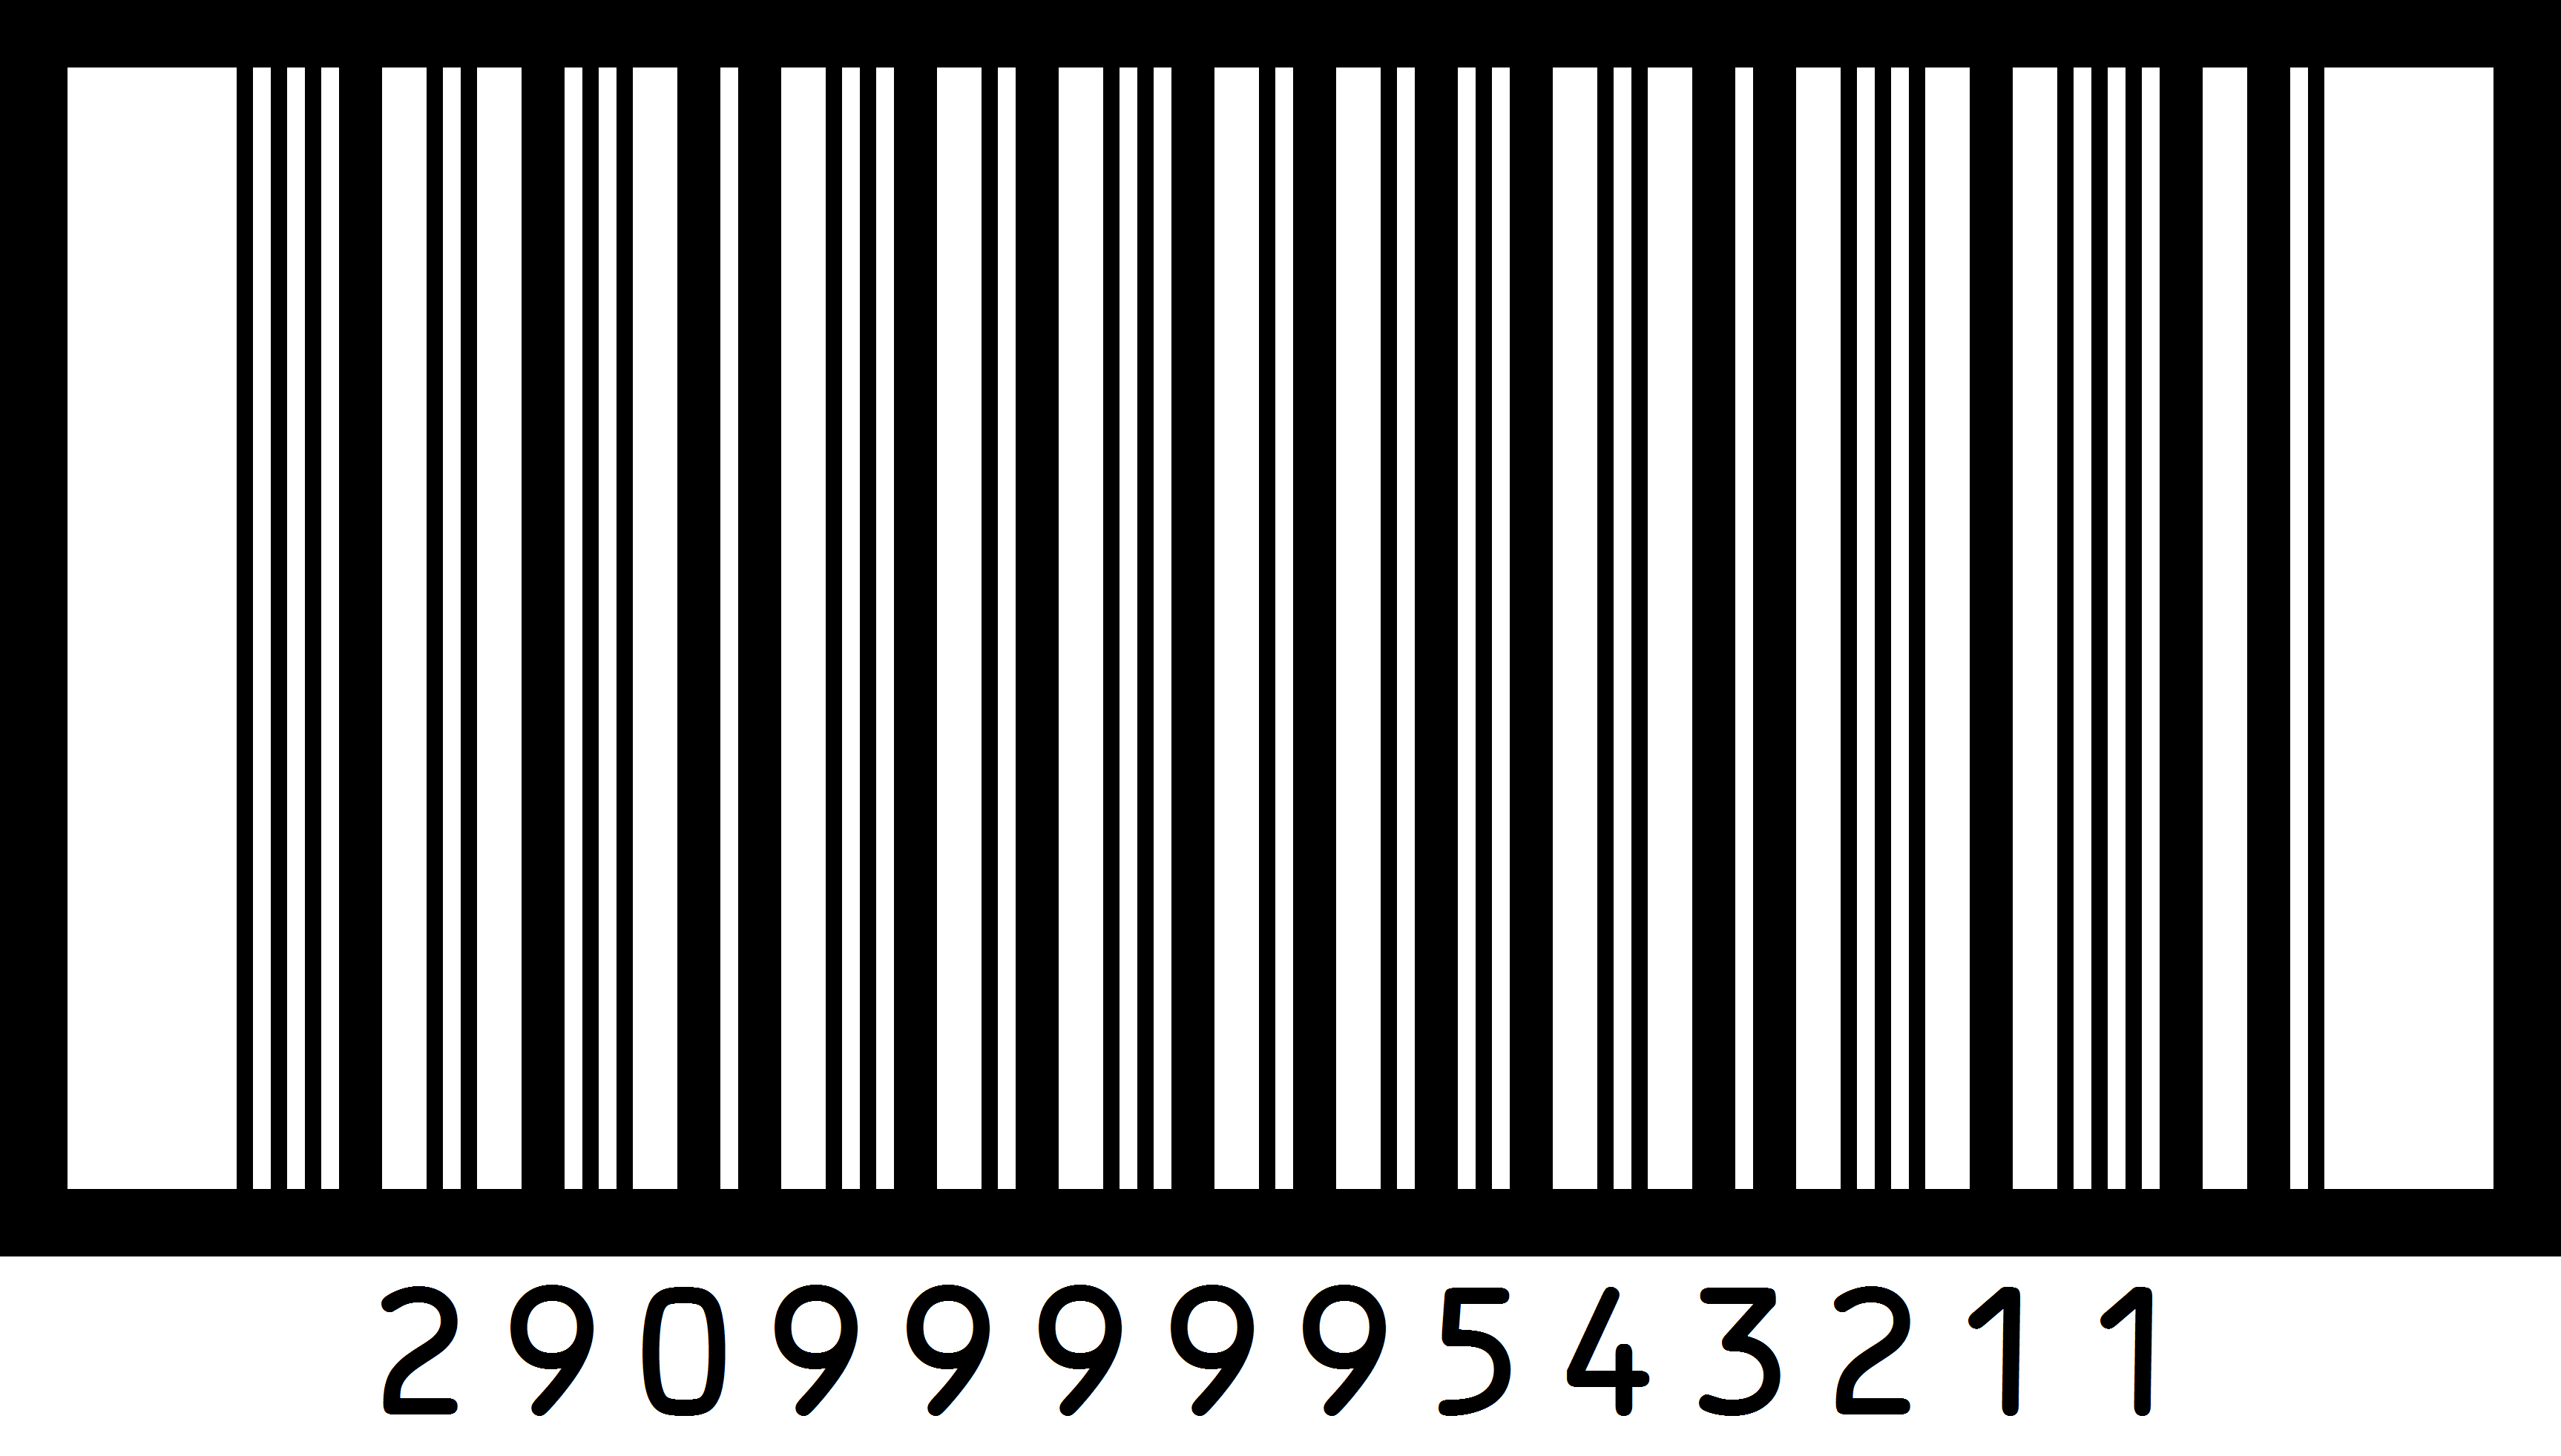 gtin 14 barcode generator